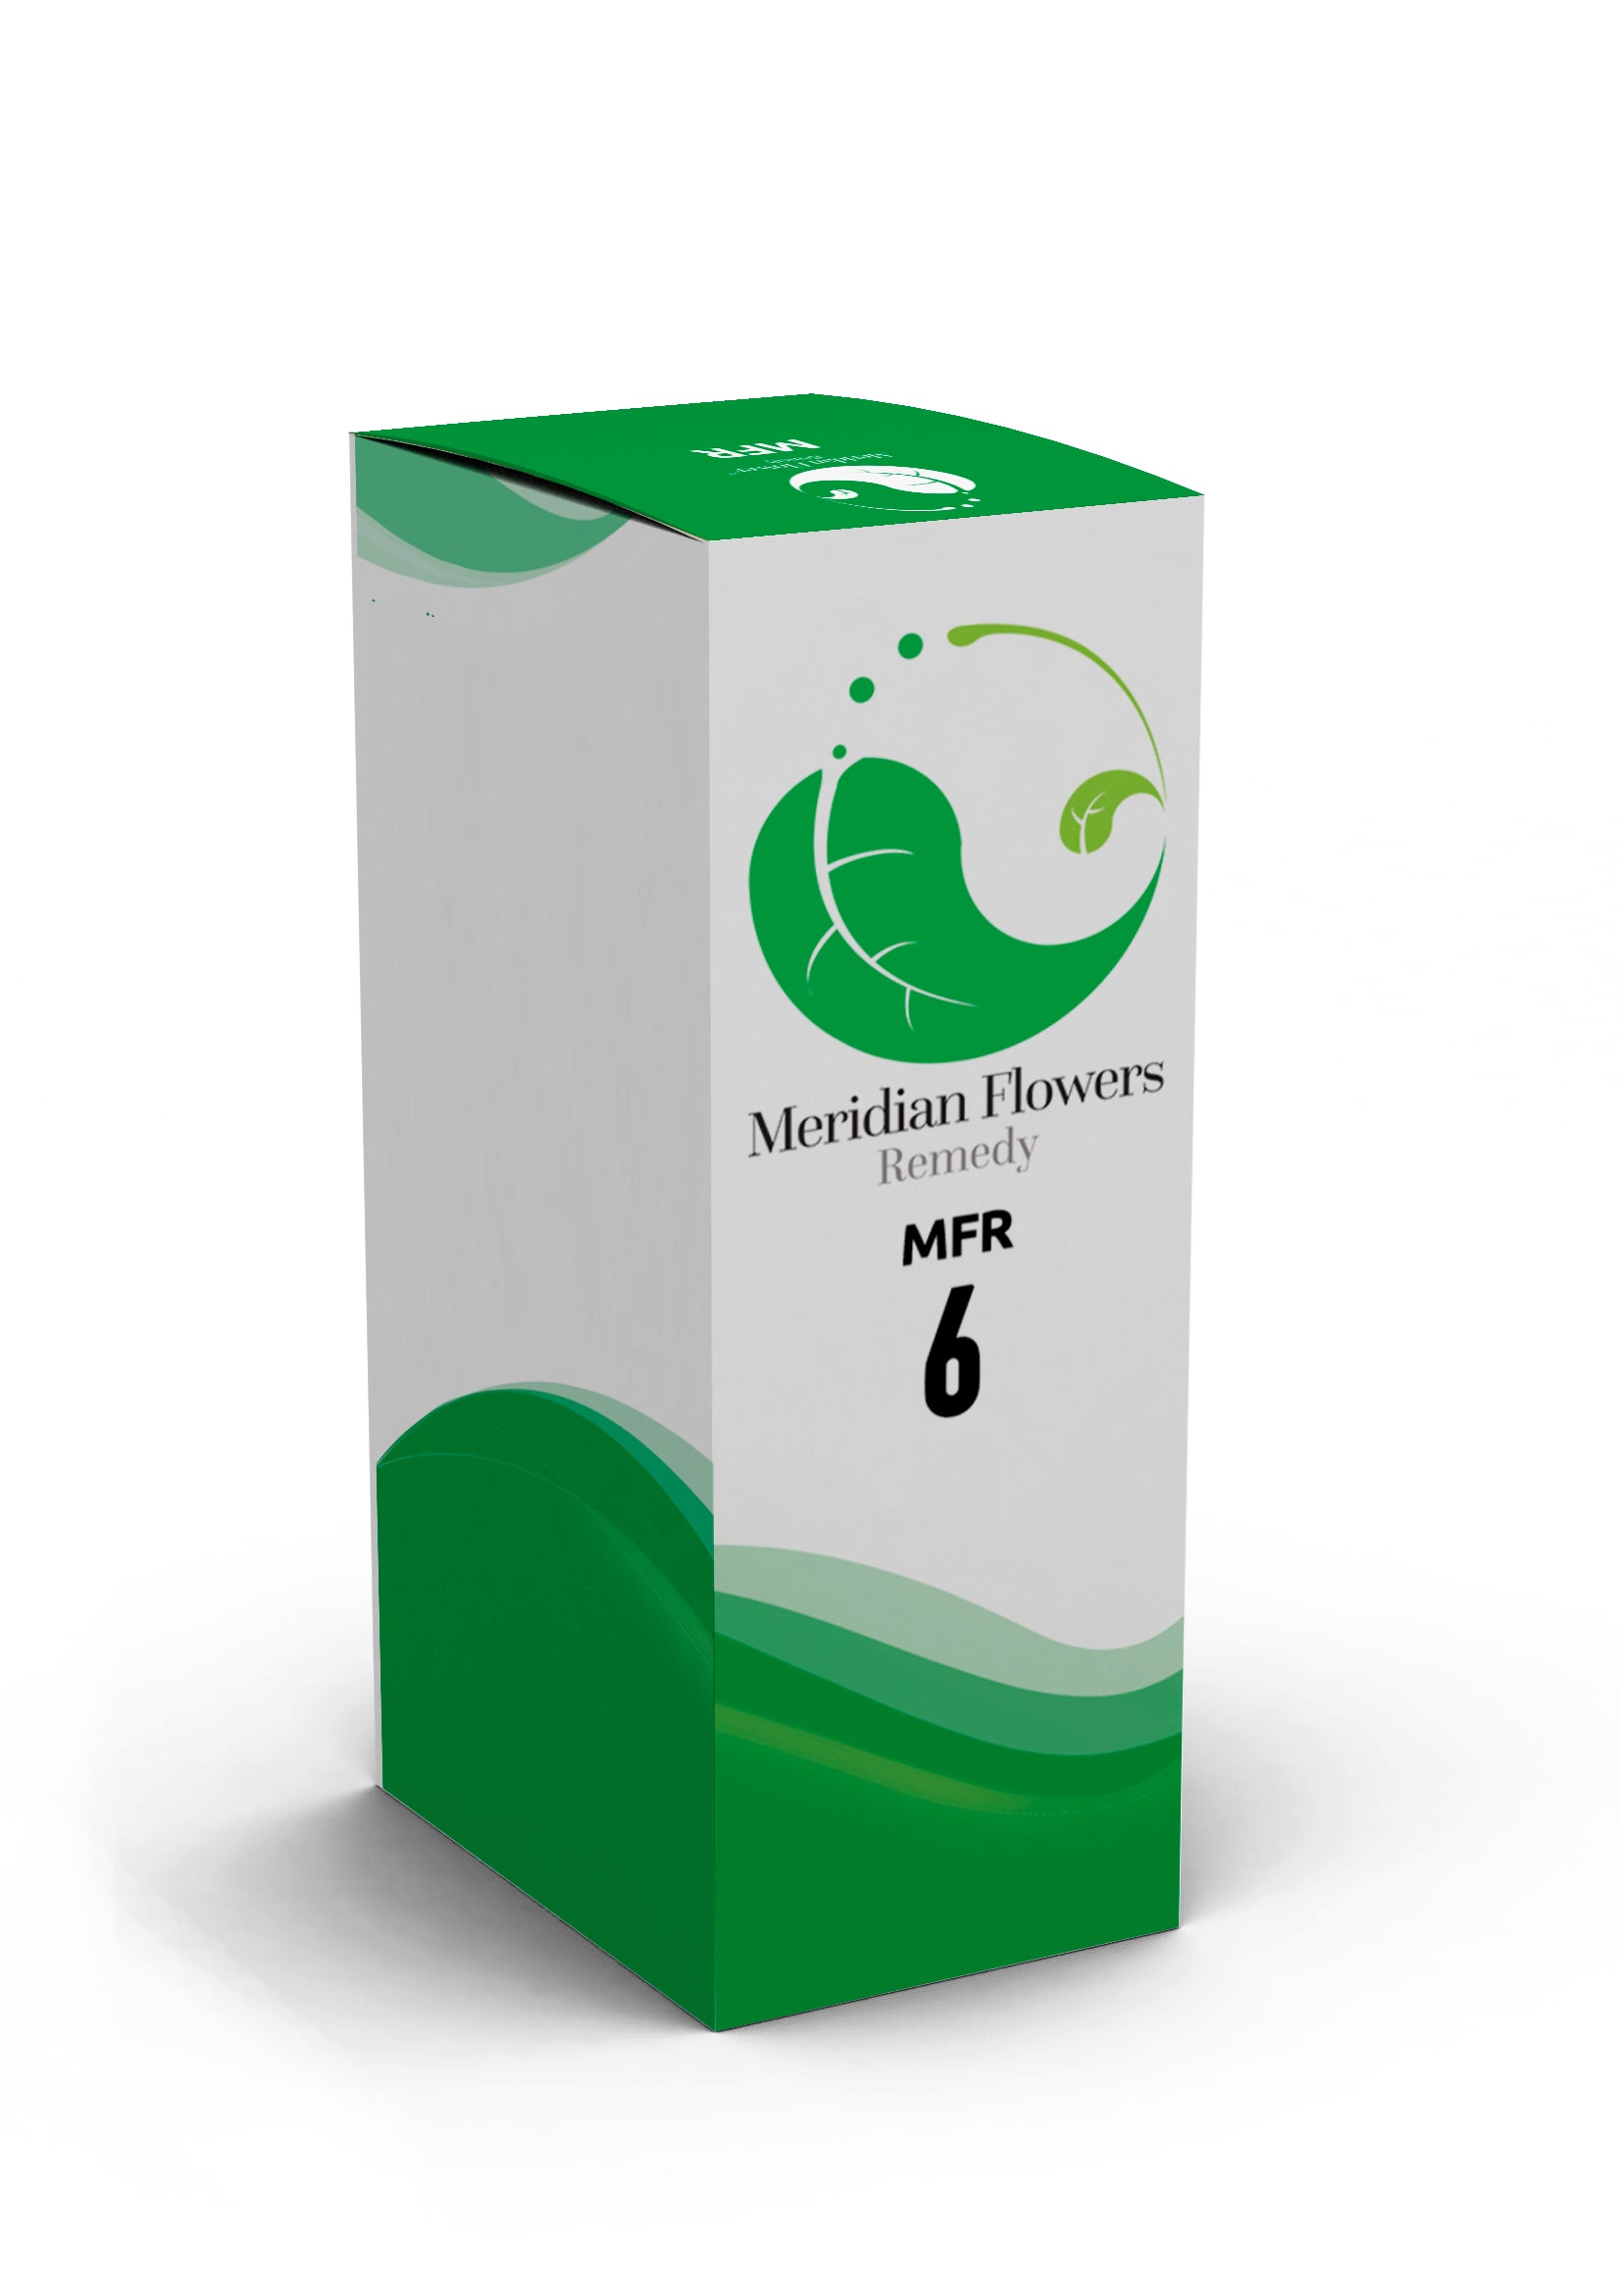 Meridian Flowers Remedy - MFR 6